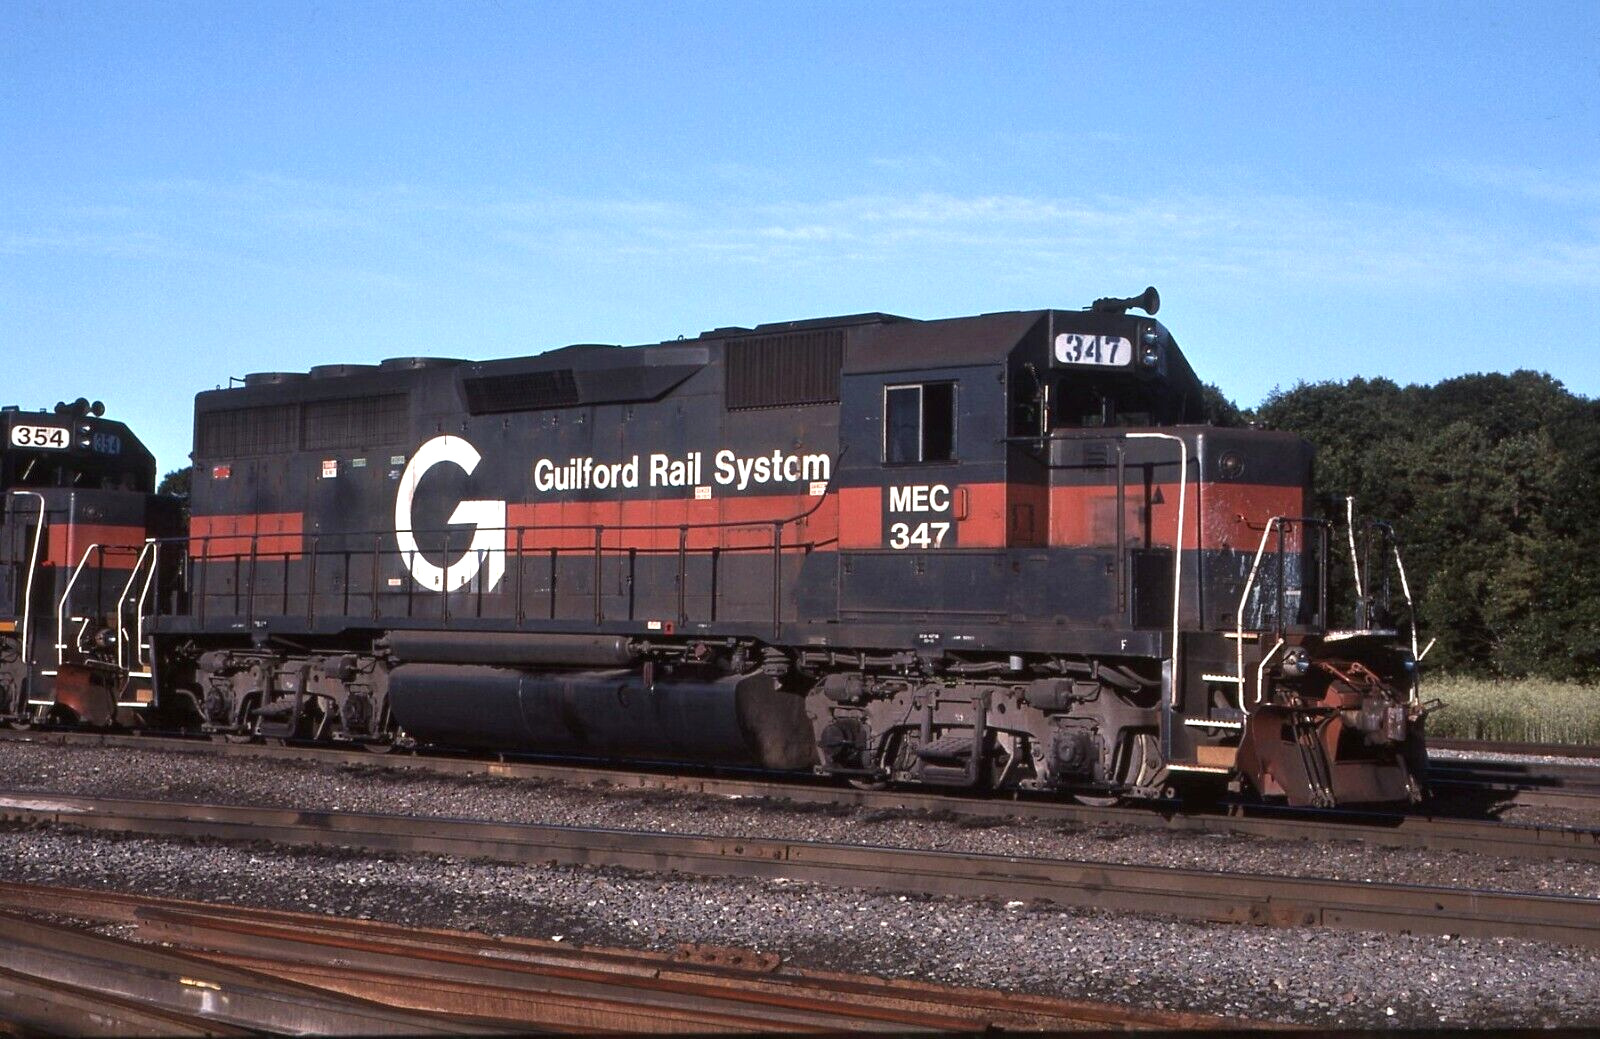 Original Slide: Maine Central / Guilford Rail System GP40 347